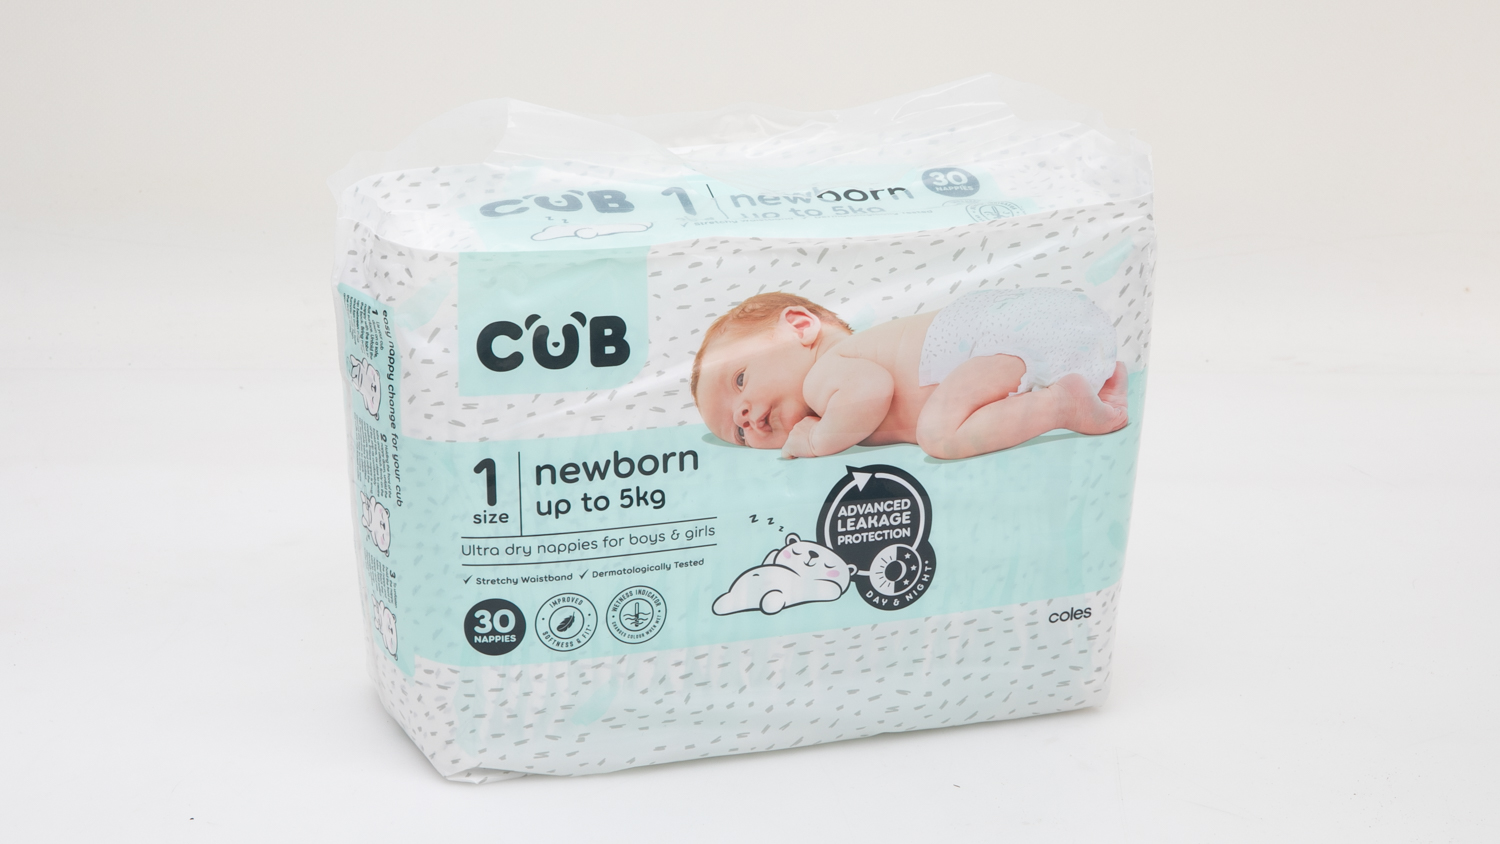 Coles CUB Newborn Size 1 carousel image